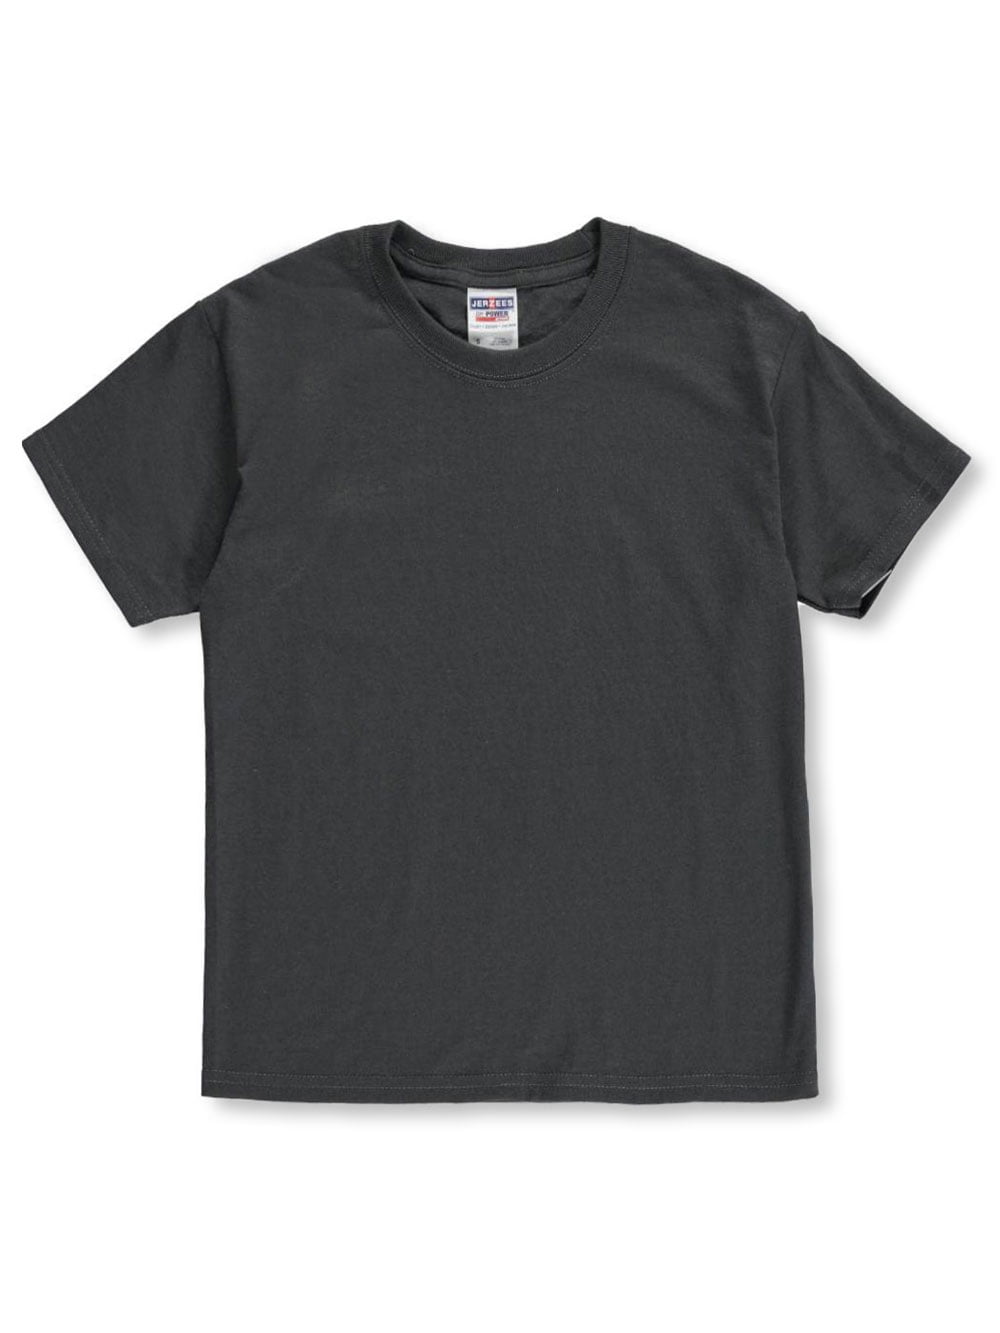 Jerzees Boys' Boys' Dri-Power T-Shirt - charcoal gray, 10 - 12